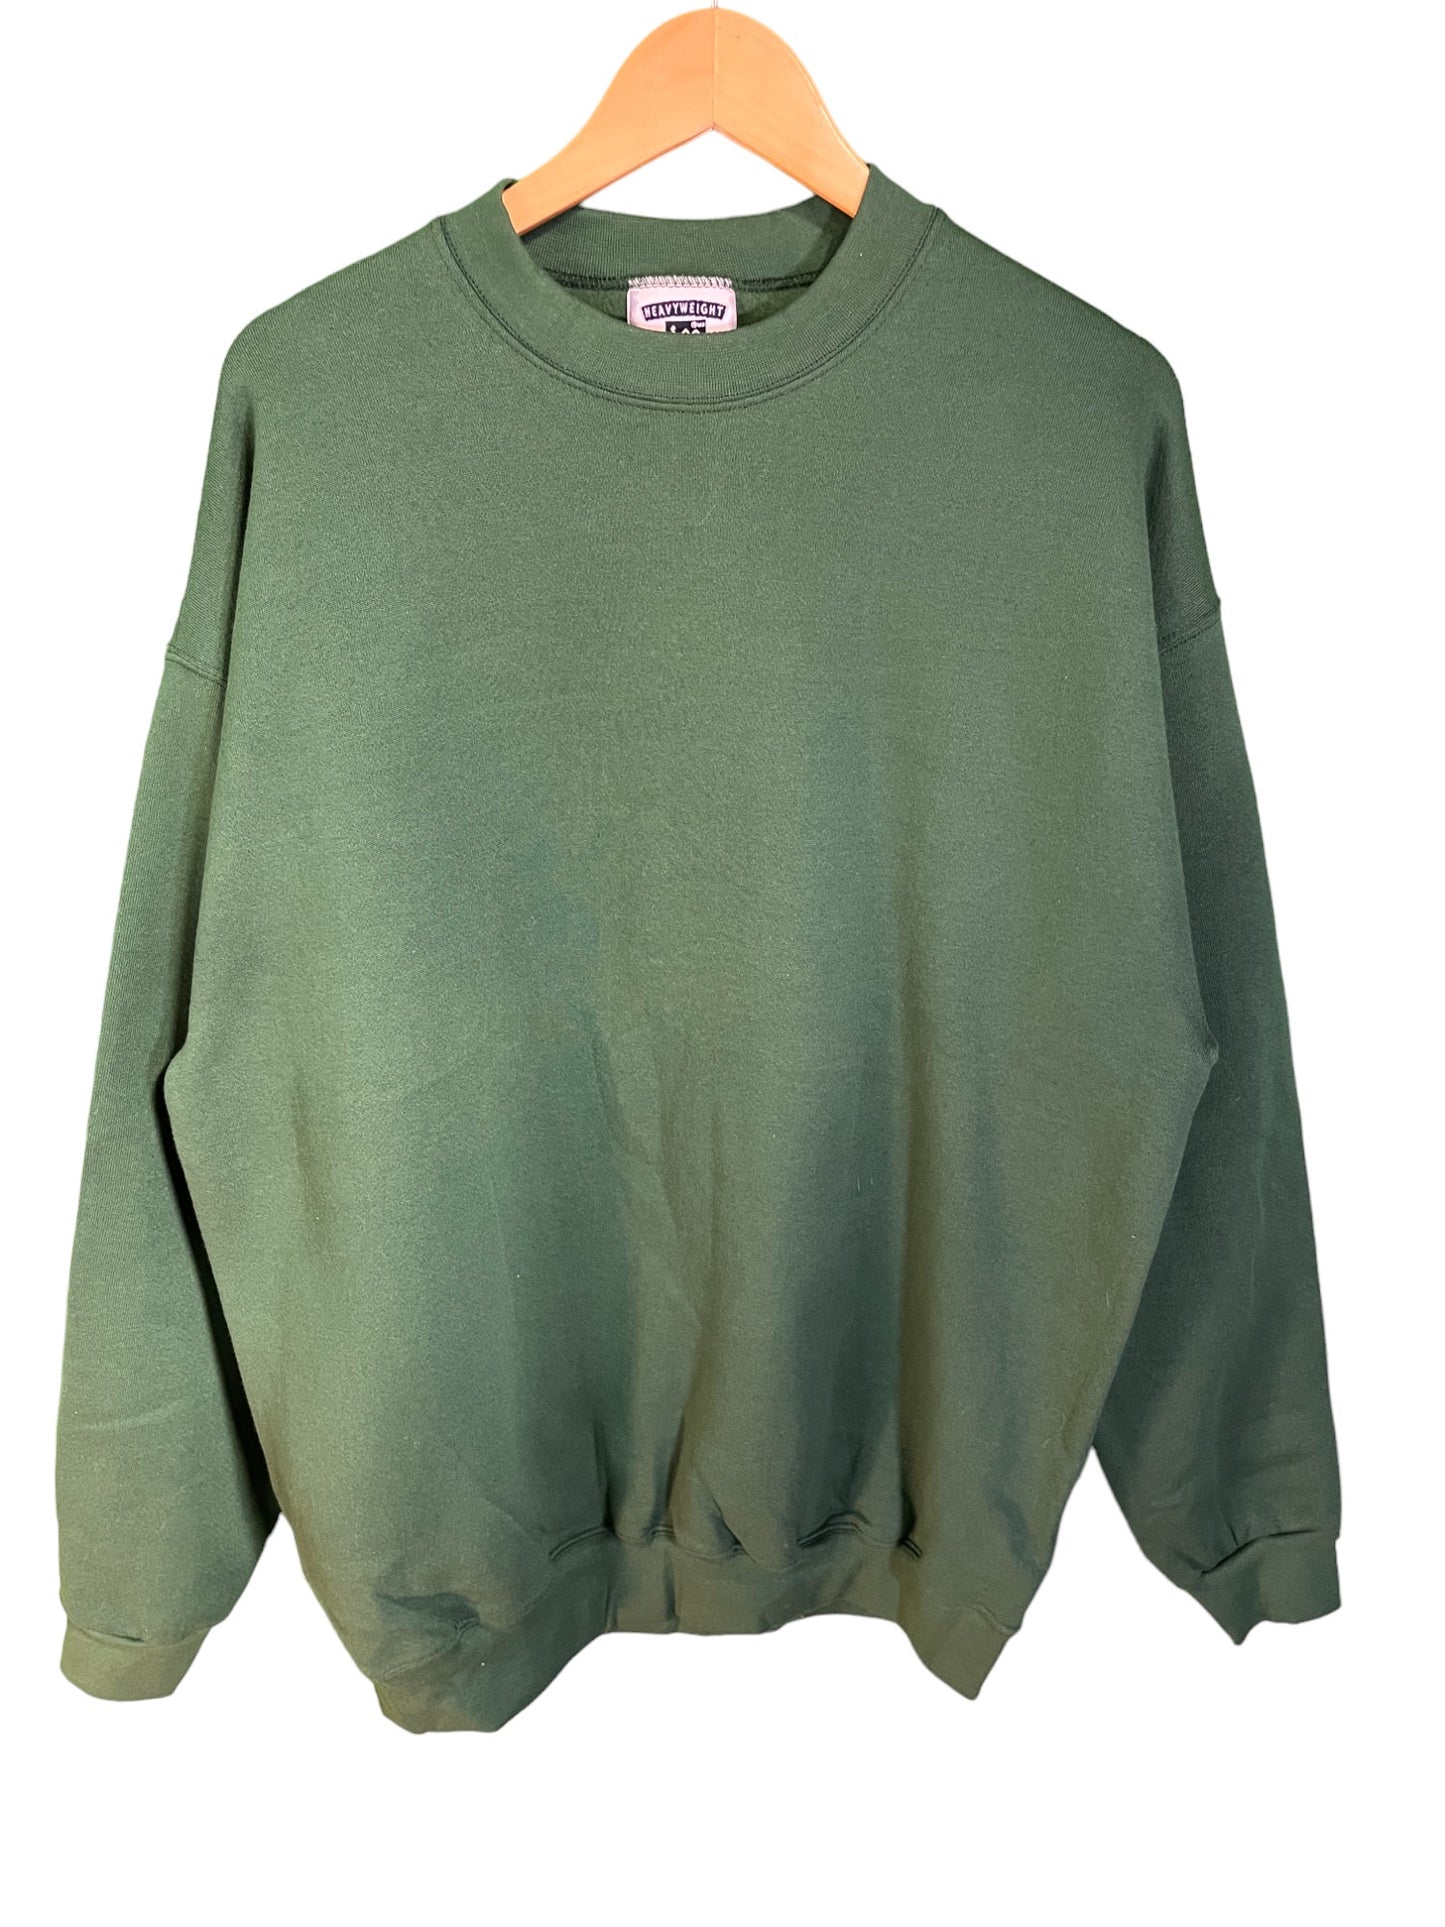 Vintage 90's Lee Heavyweight Blank Green Crewneck Sweater Size XL